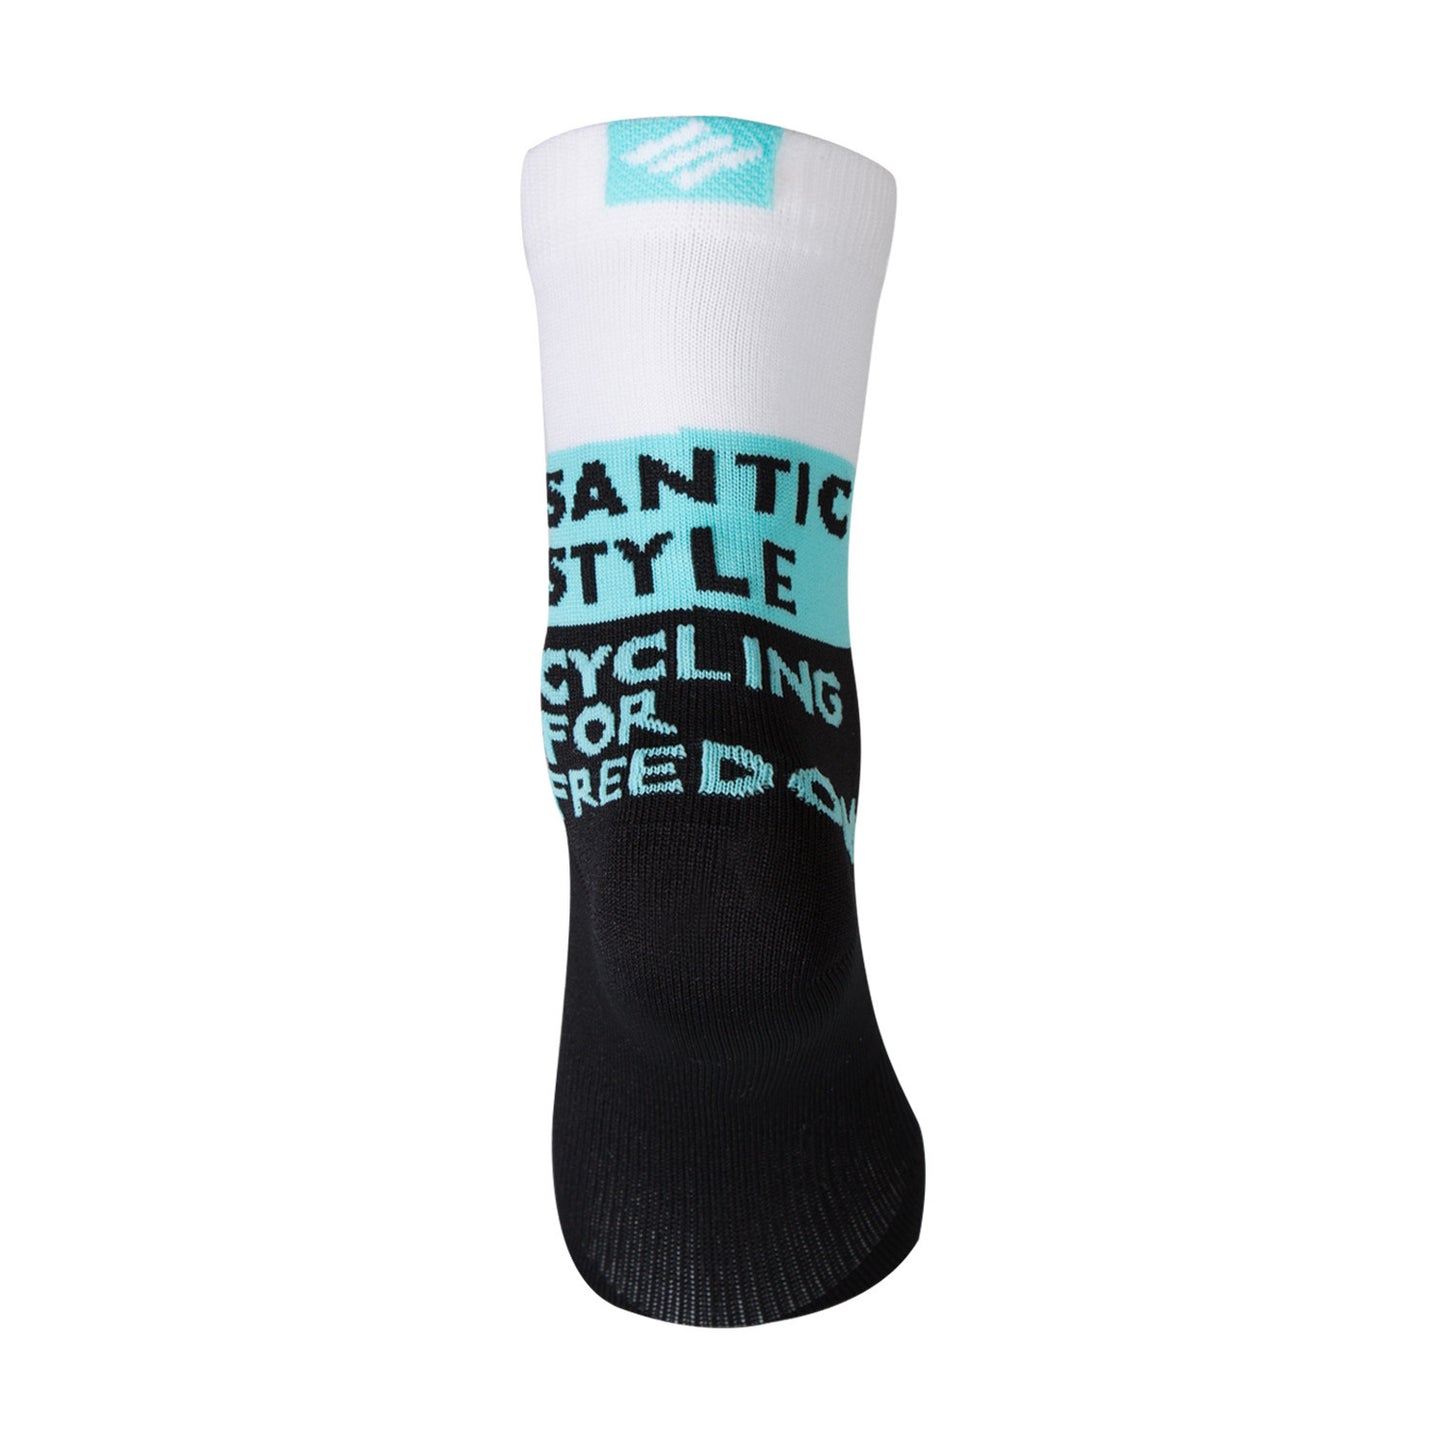 Santic liyue Men Women Cycling Socks Free Size